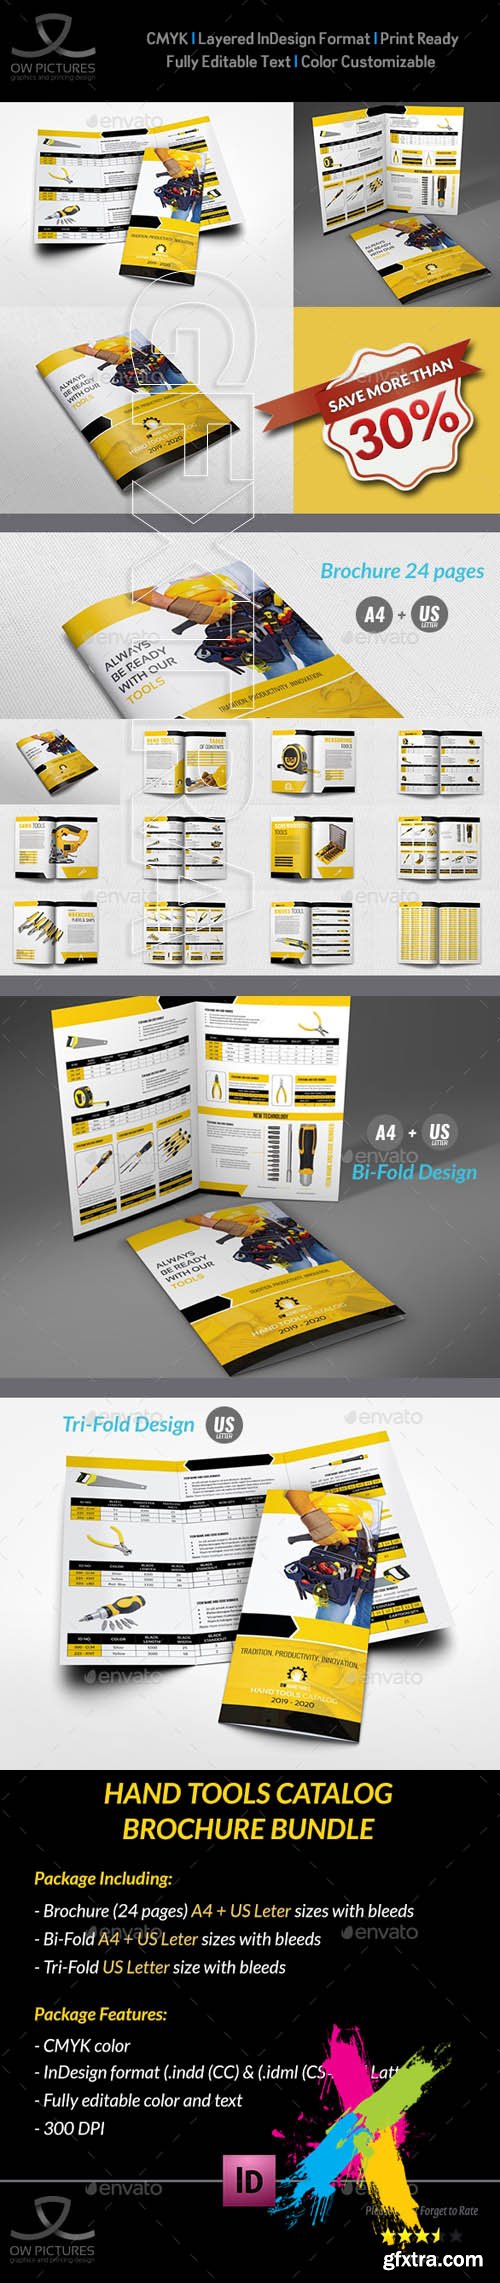 Graphicriver - Hand Tools Catalog Brochure Bundle 20171044